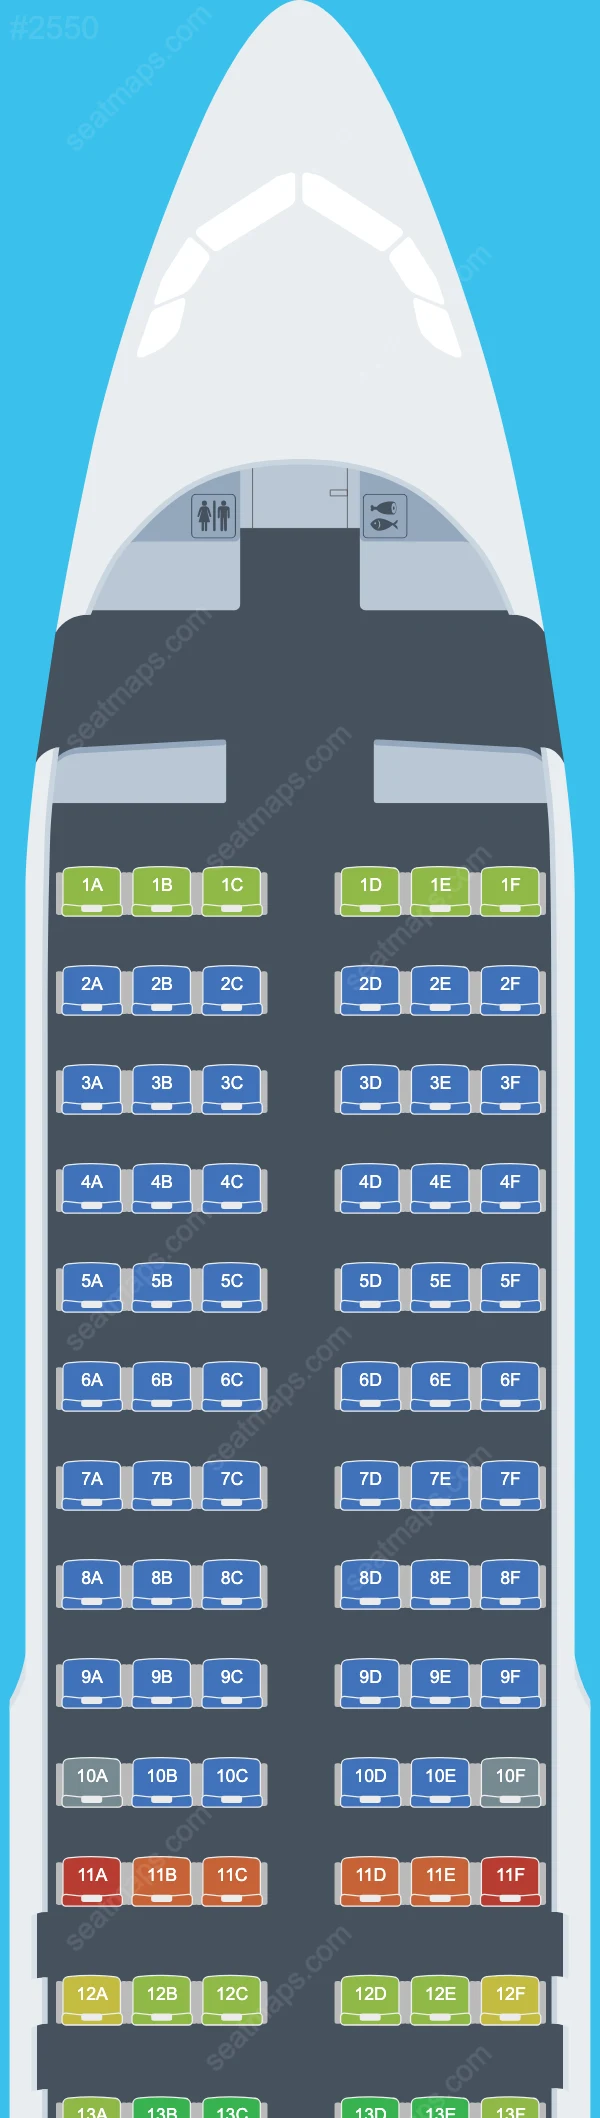 Jetstar Airways Airbus A320 Seat Maps A320-200 V.2